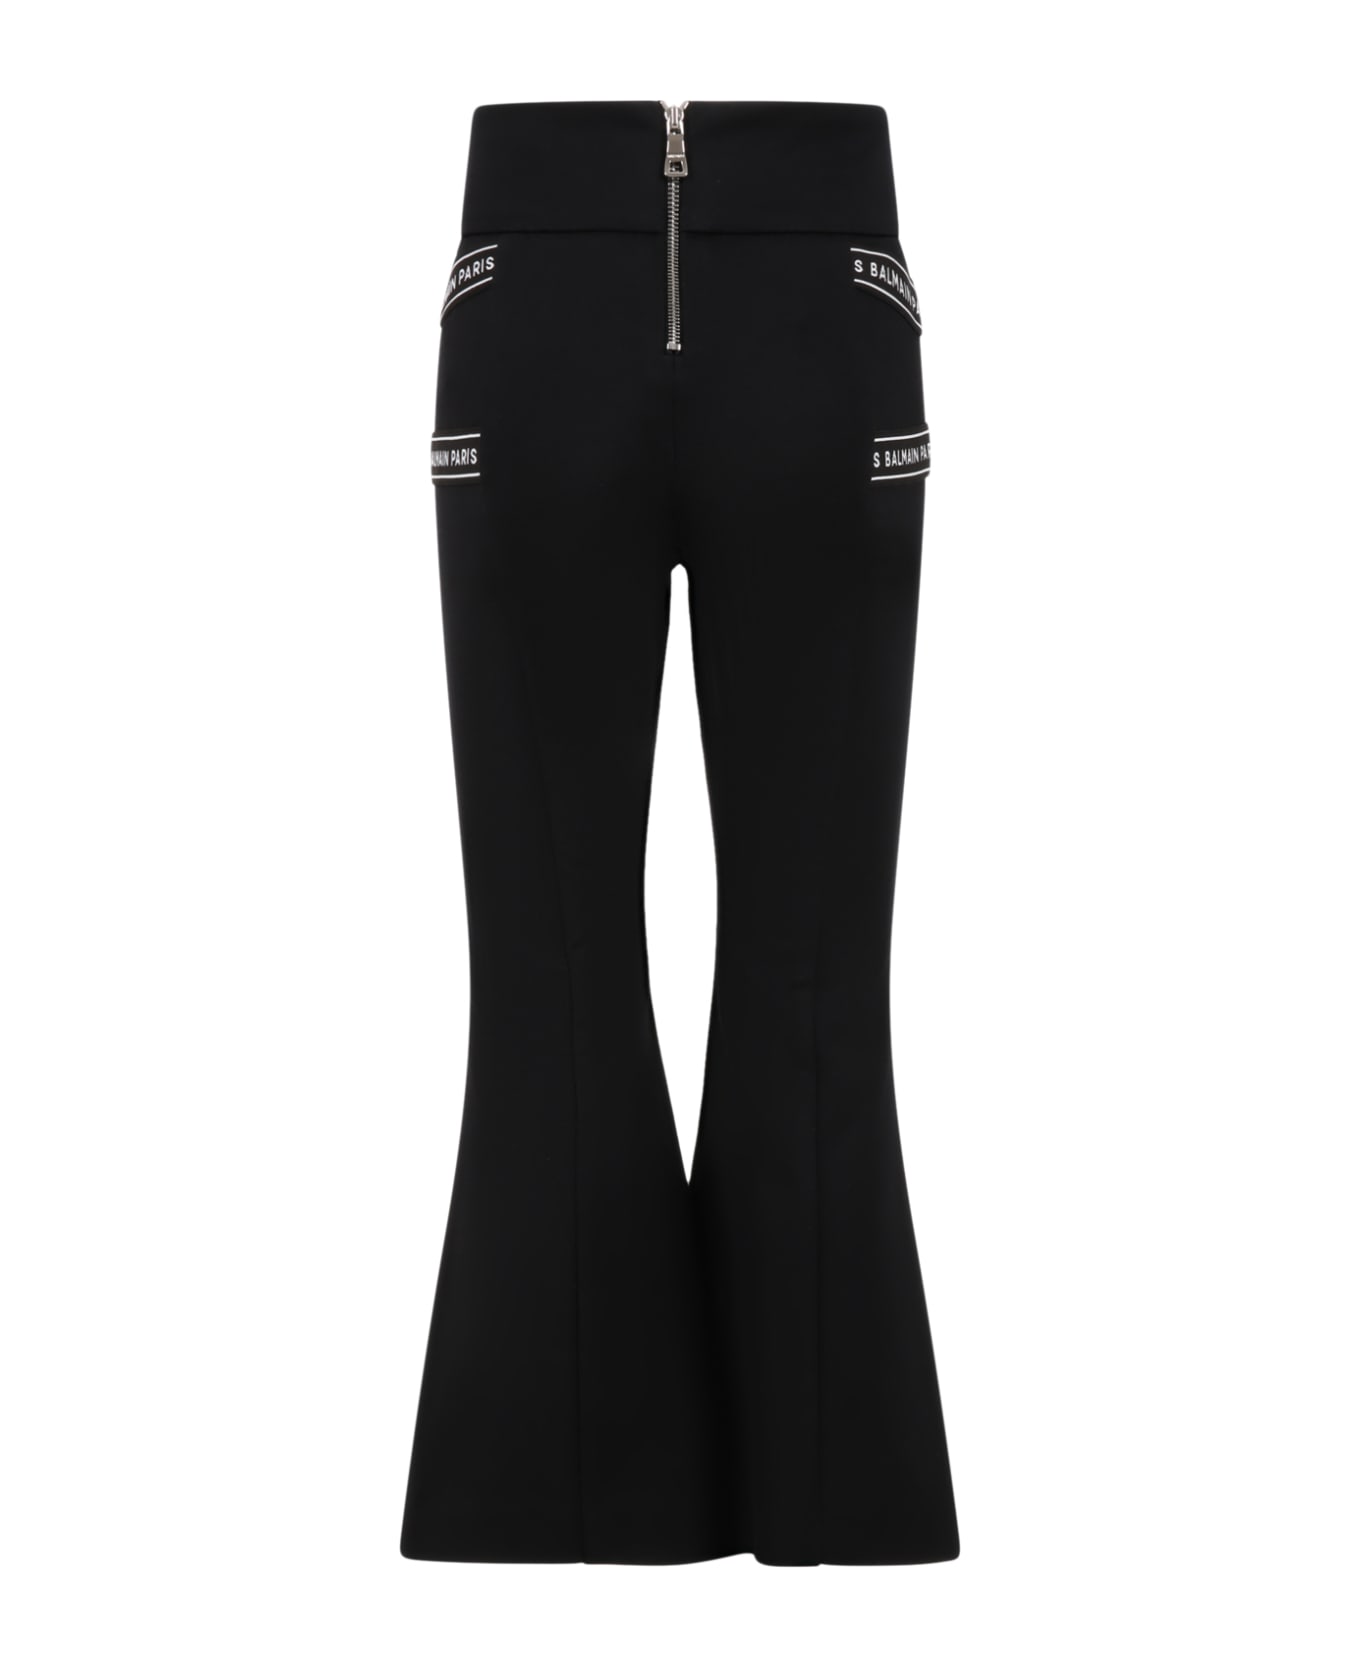 Balmain Black Trousers For Girl With Logo - black